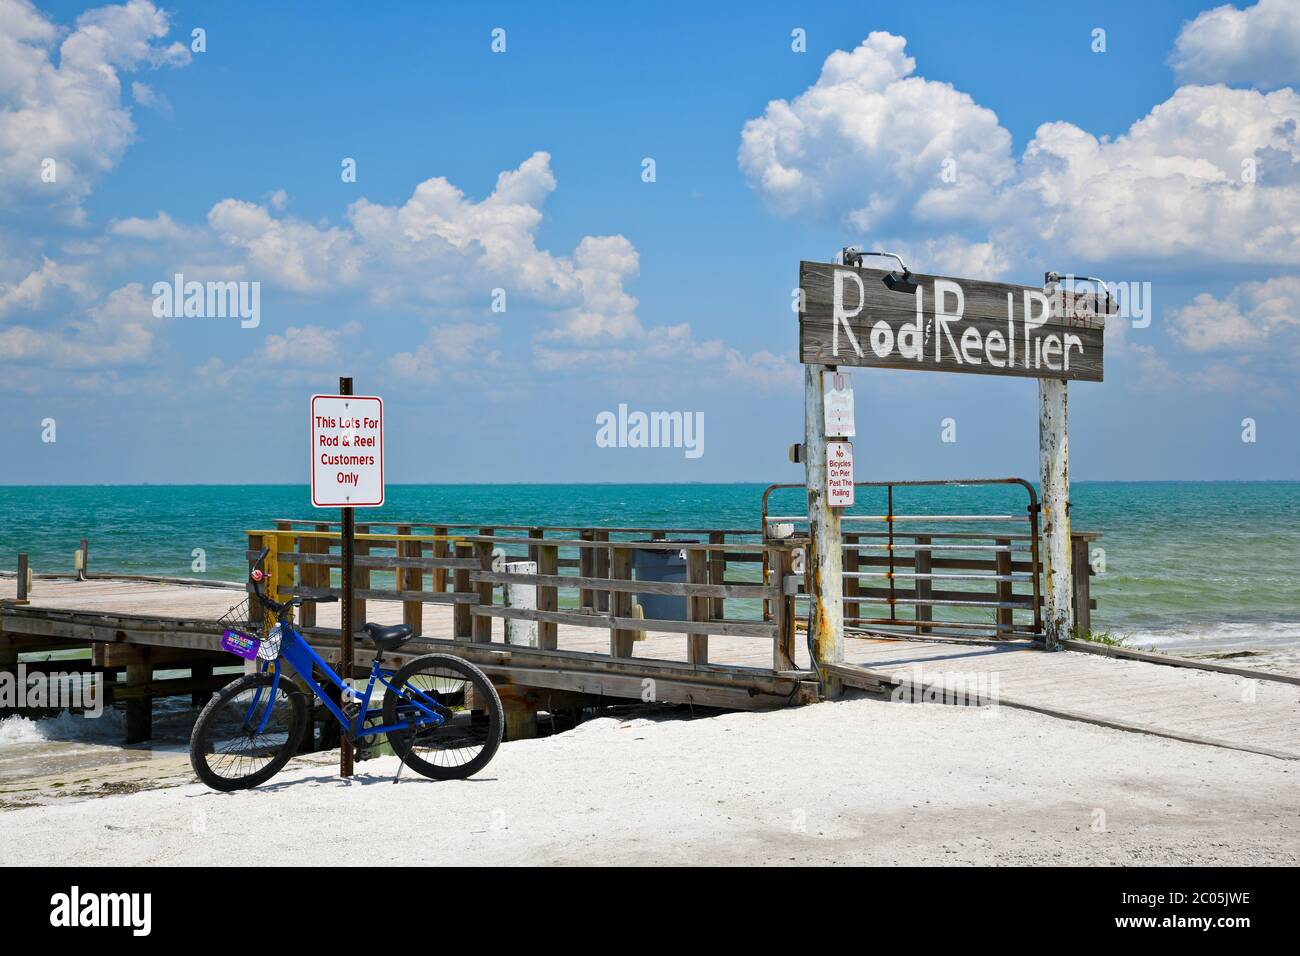 Anna Maria Island, FL / USA - May 15, 2019: Rod and Reel Fishing Pier and Restaurant on Anna Maria Island, Florida Stock Photo